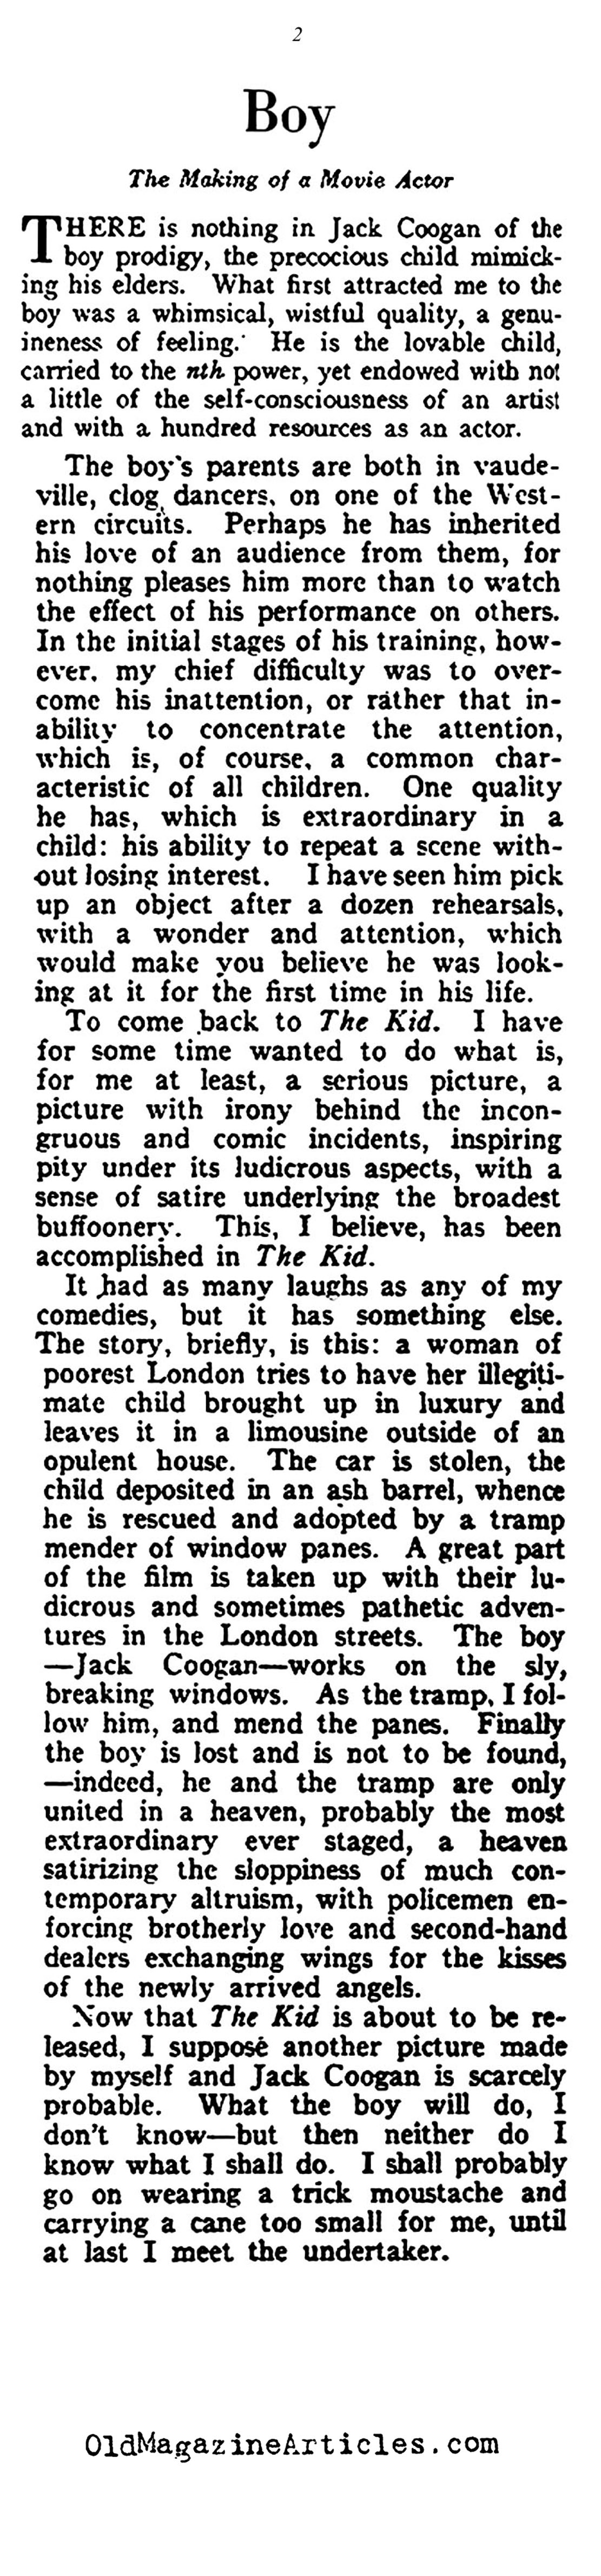 ''The Marvelous Boy of the Movies'' (Vanity Fair Magazine, 1922)